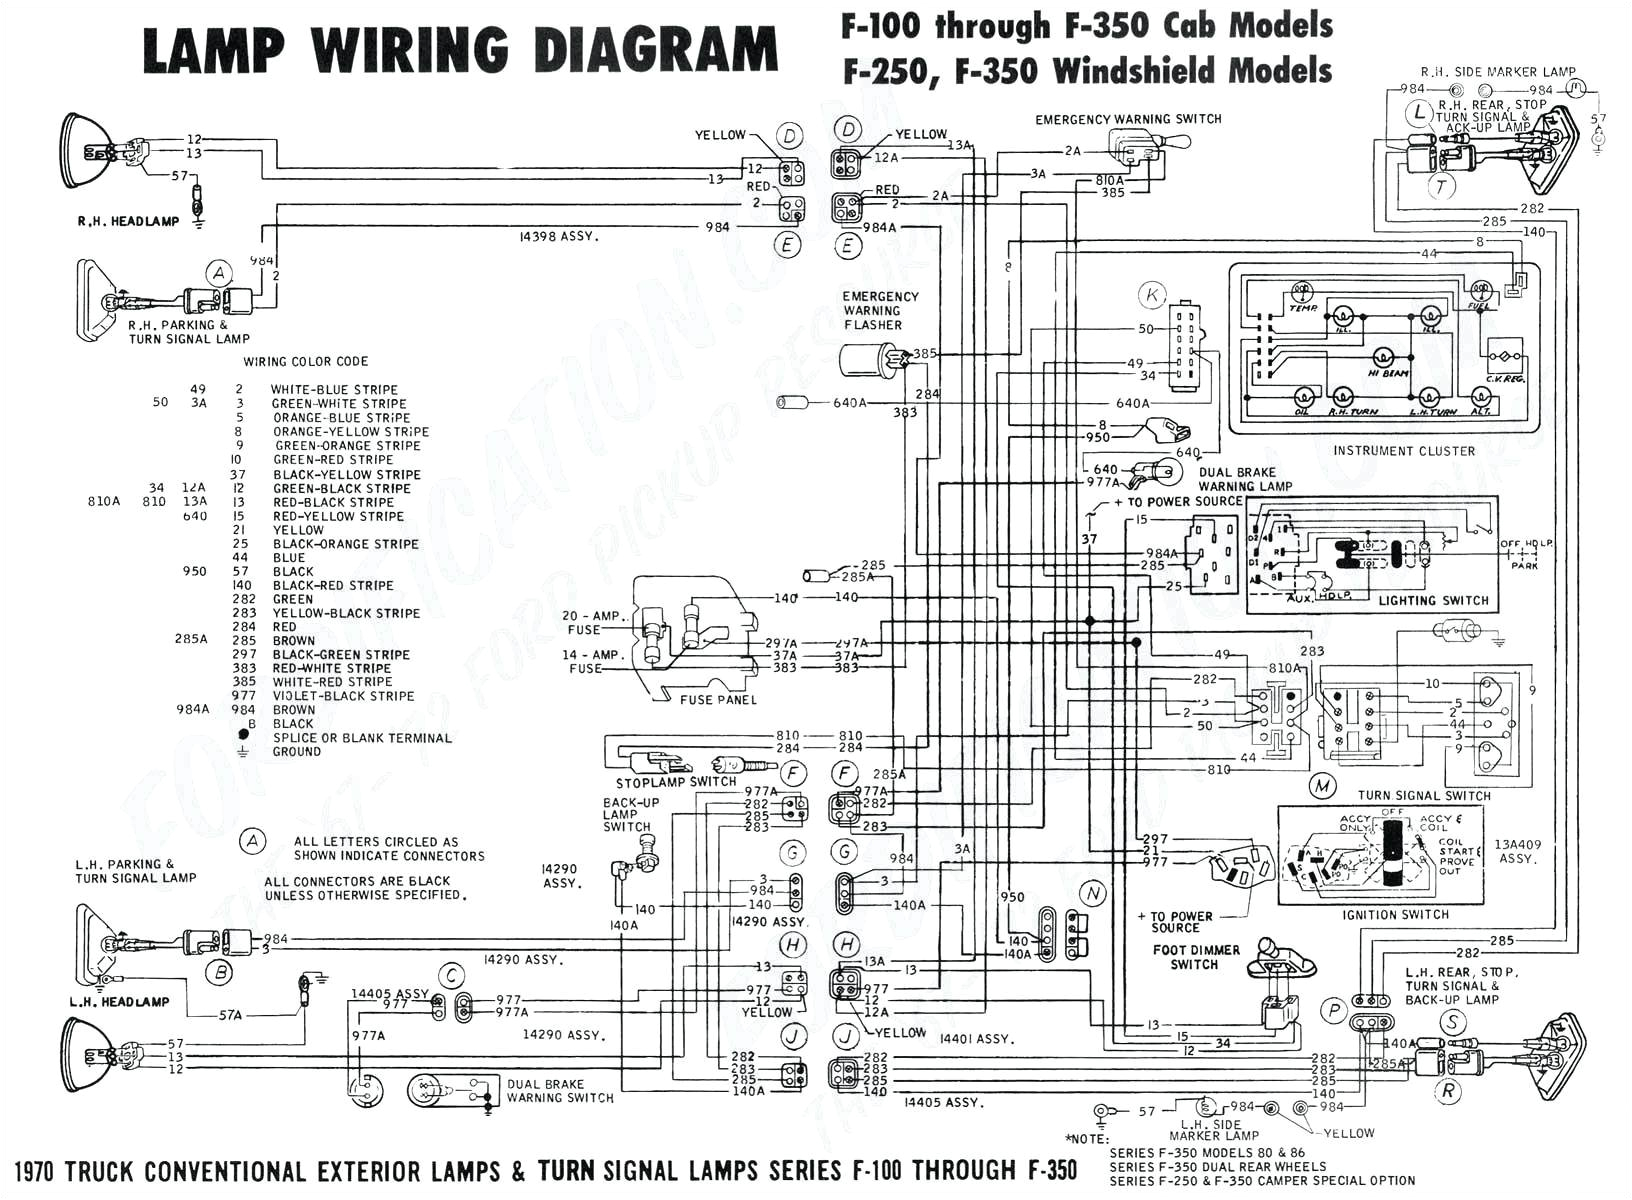 wiring diagram sony car stereo only schematic wiring diagram diagram powersupplycircuit benqlaptopbatterychargercircuithtml wiring diagram sony car